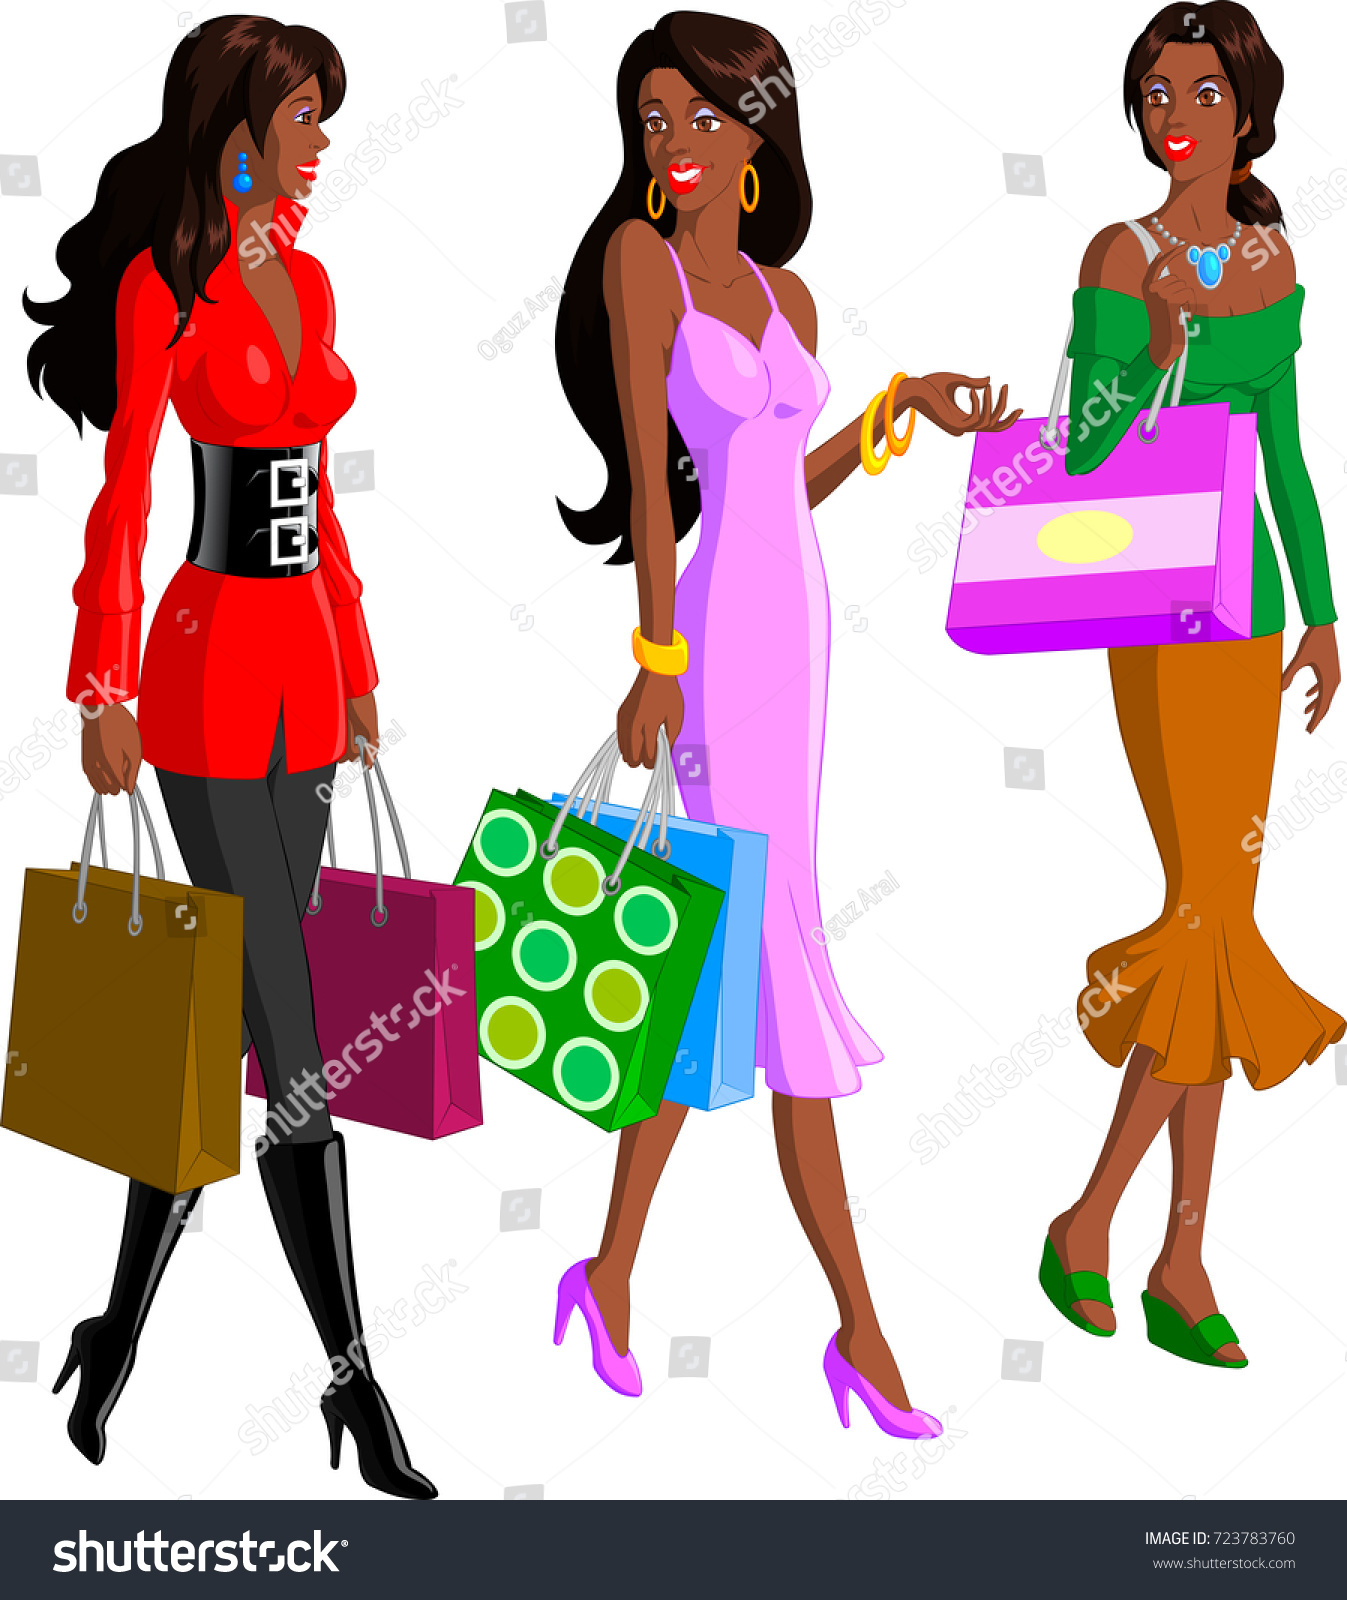 26,242 Black woman shopping bag Stock Illustrations, Images & Vectors ...